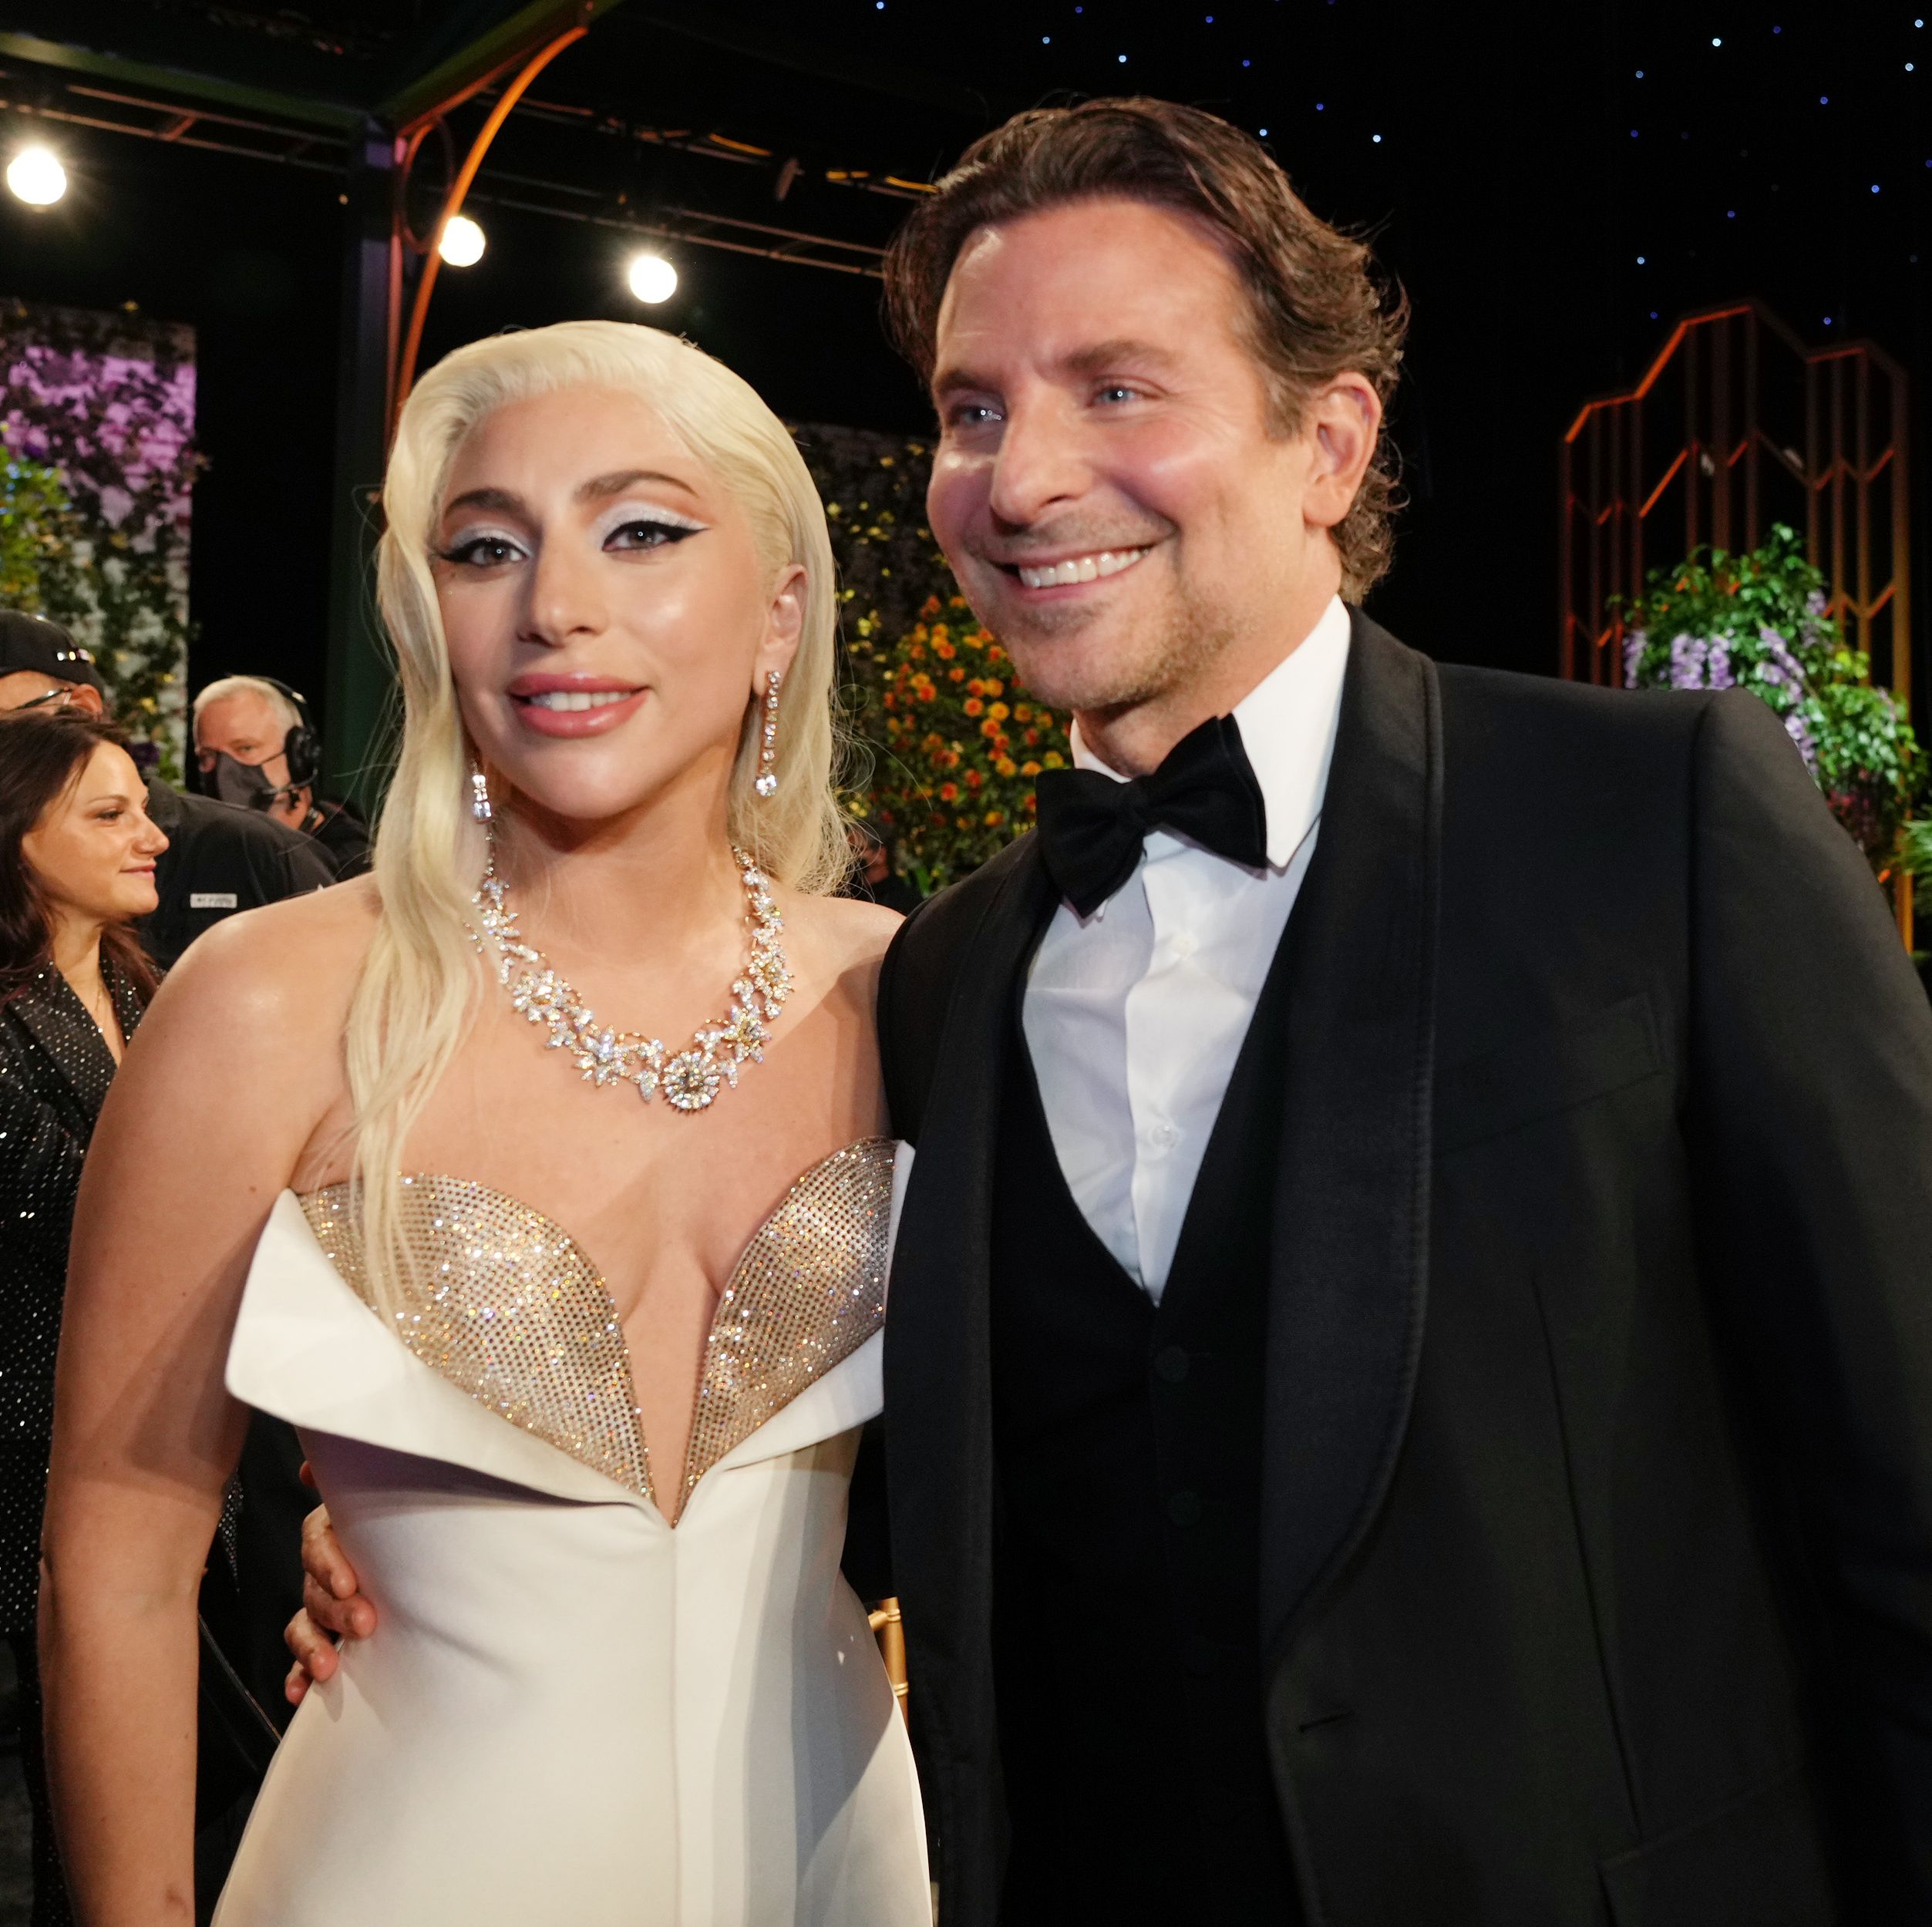 Alert: Lady Gaga and Bradley Cooper Reunited at the SAG Awards Last Night